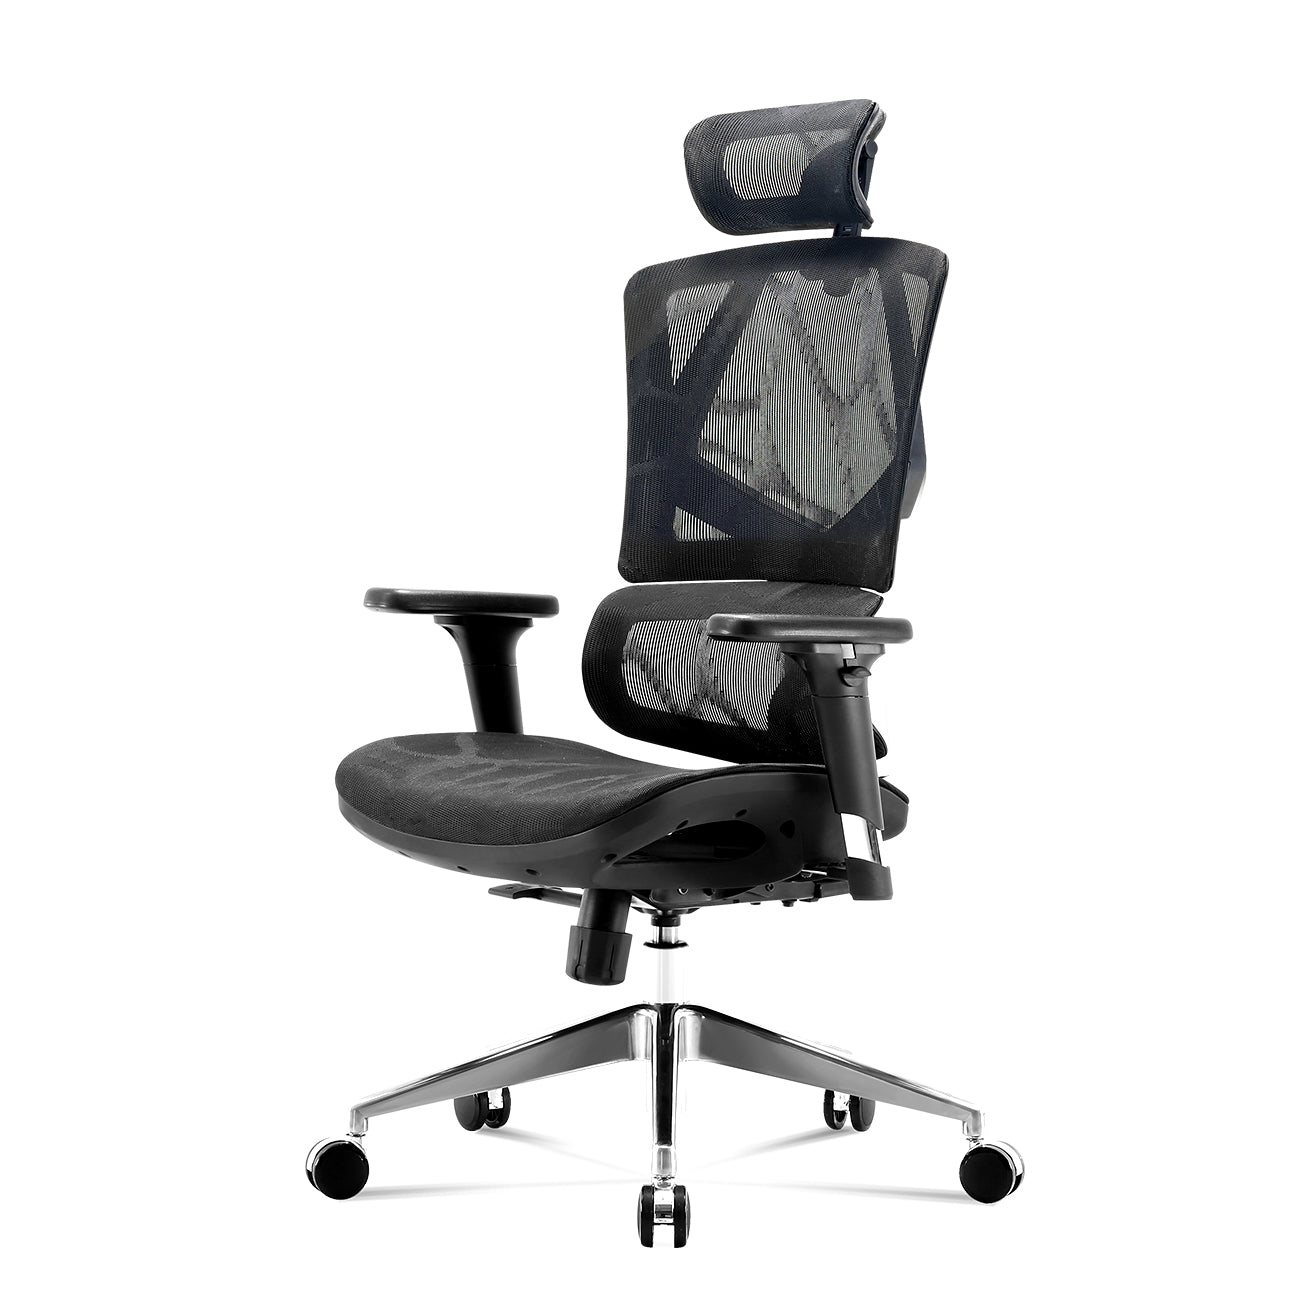 M90 Series ergonomic office chairs